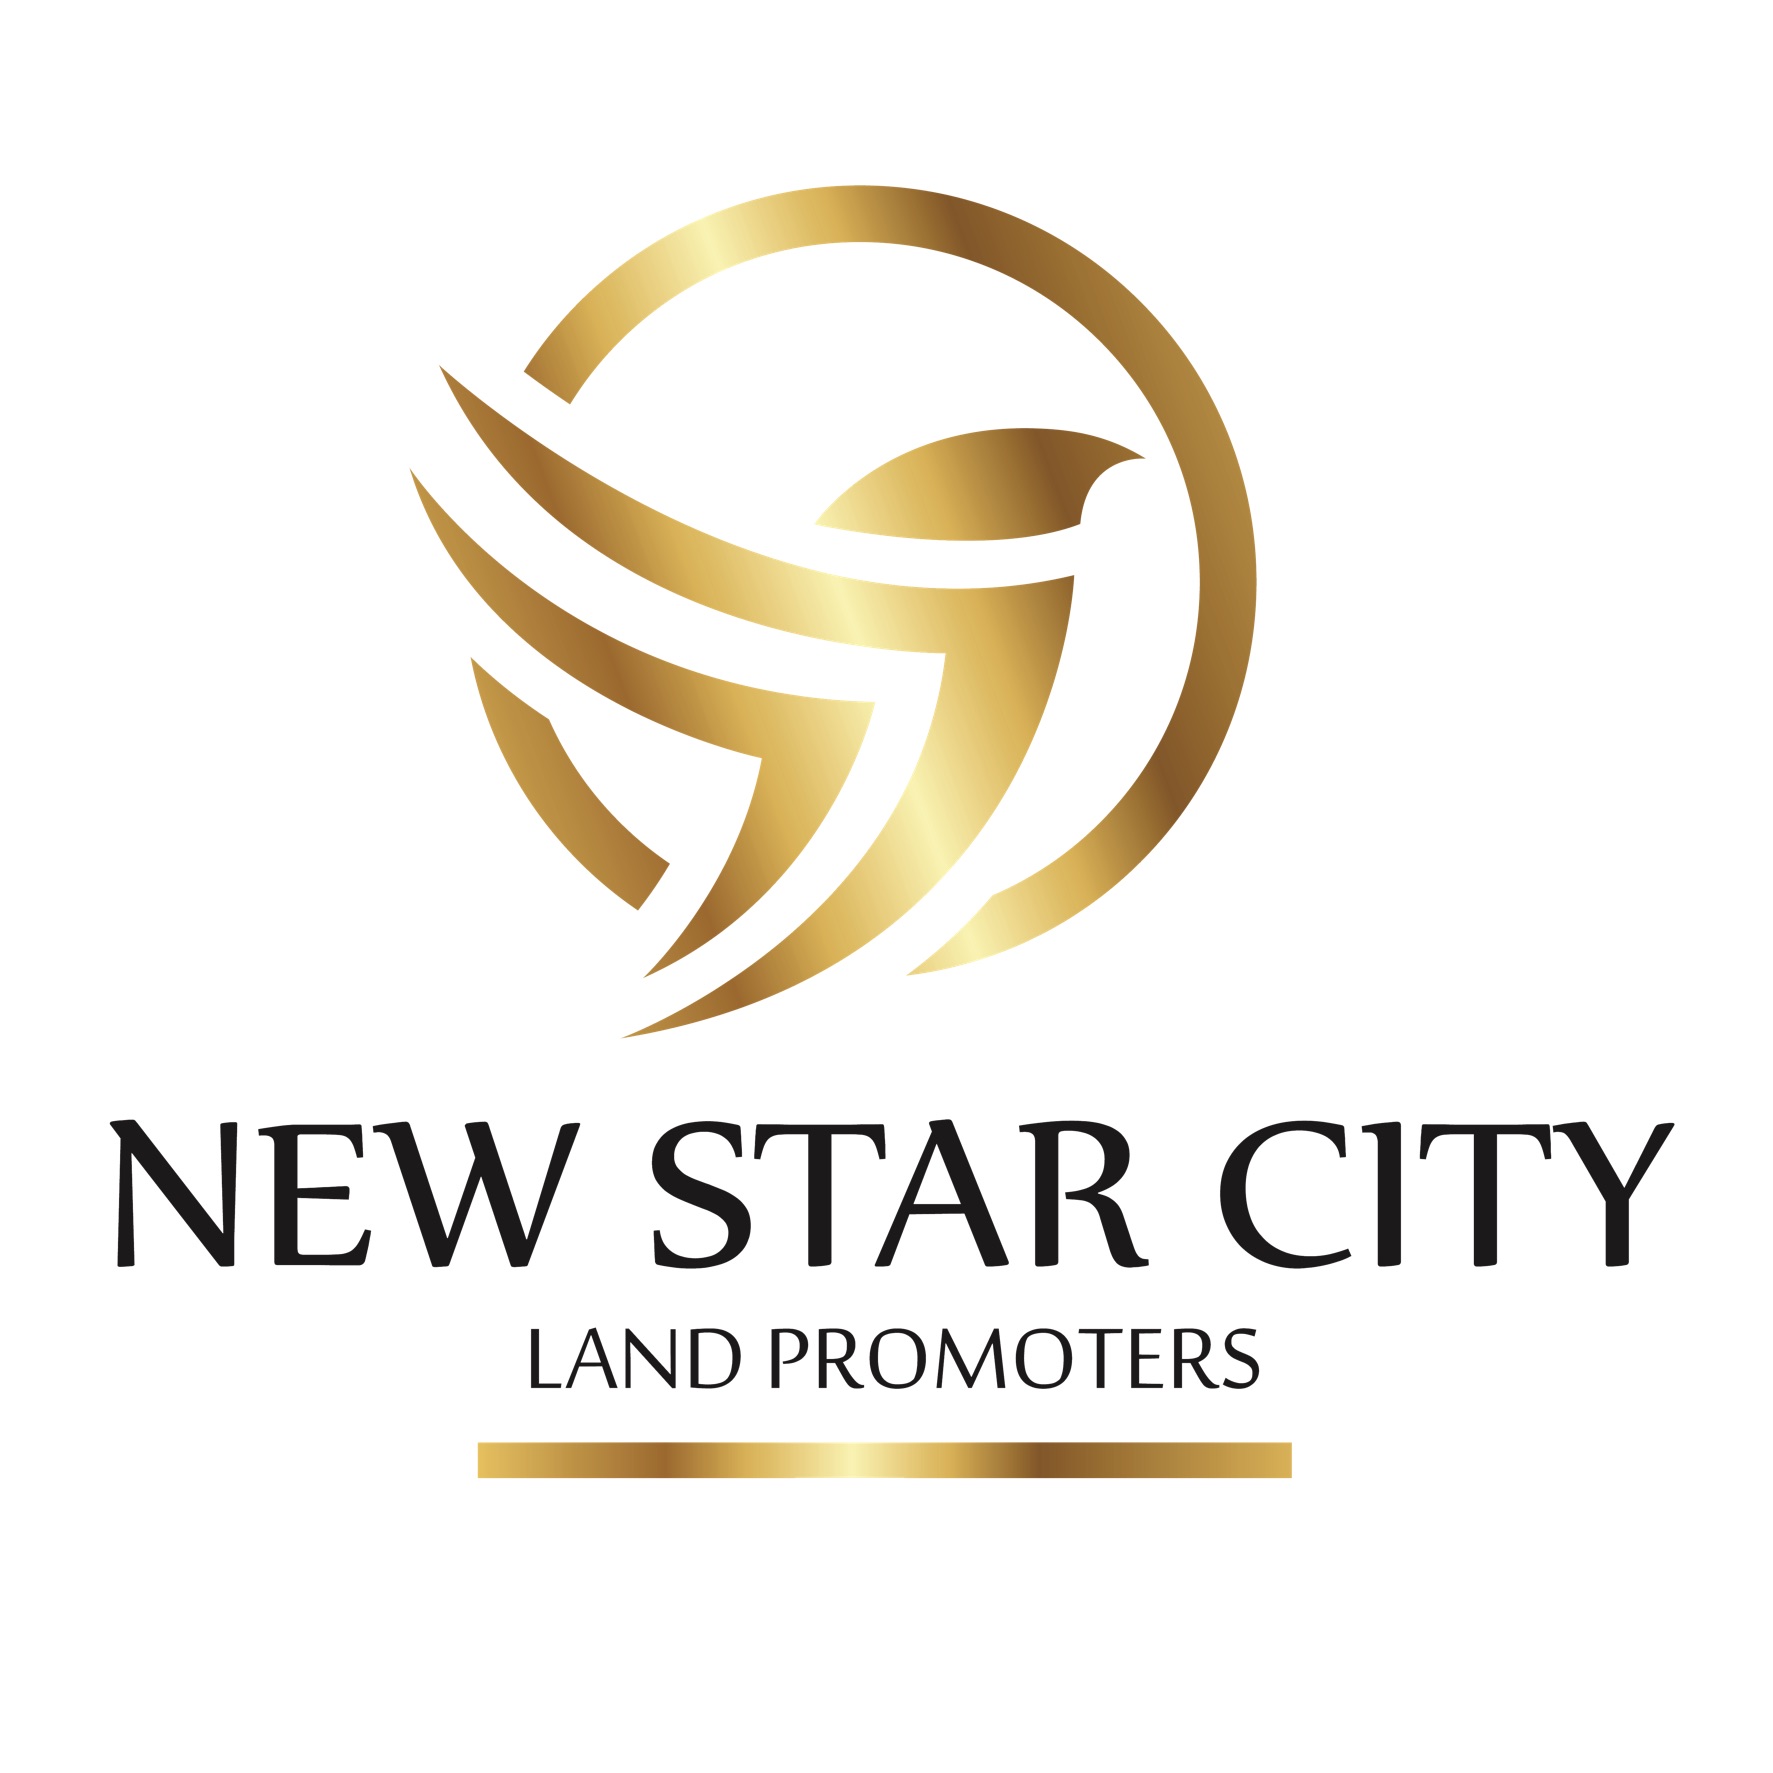 NEW STAR CITY PROPERTIES